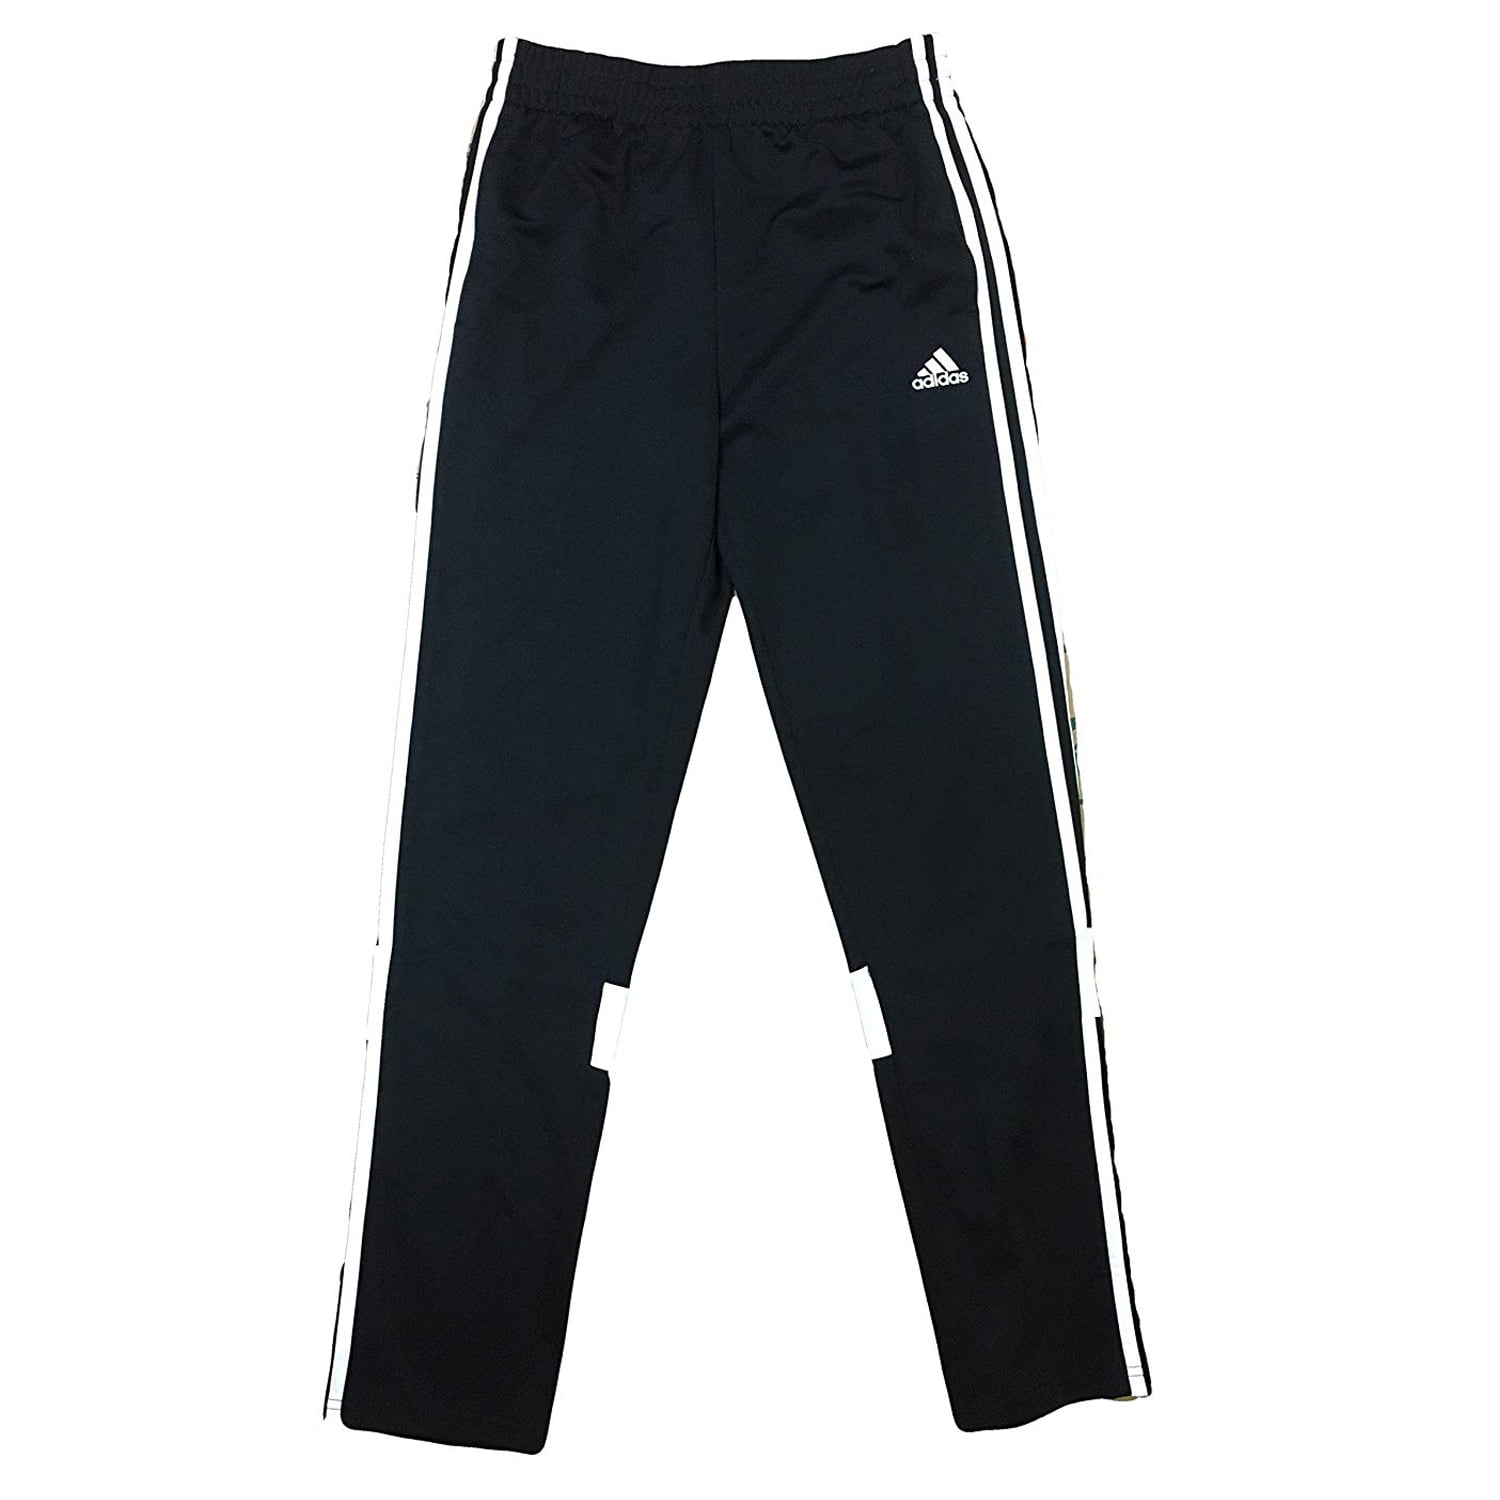 Adidas Boy's Youth 3 Stripes Performance Midfielder Warm Up Track Pants ...